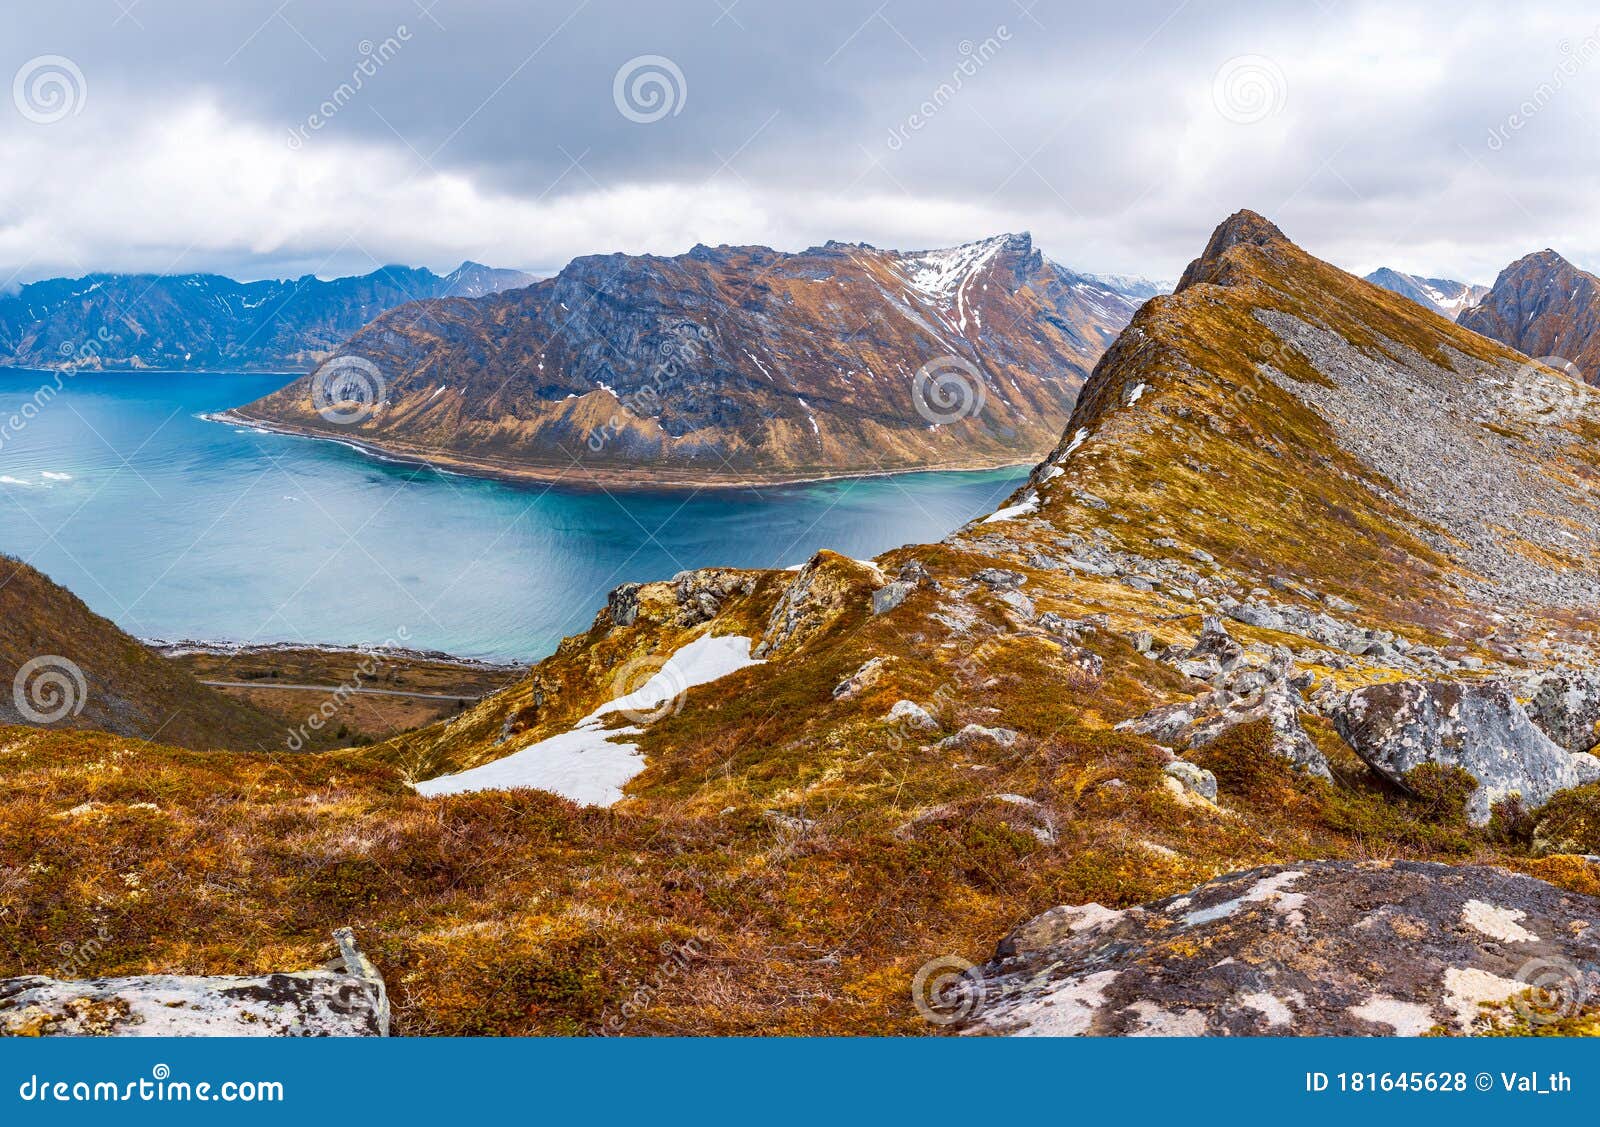 the mountain husfjellet on senja